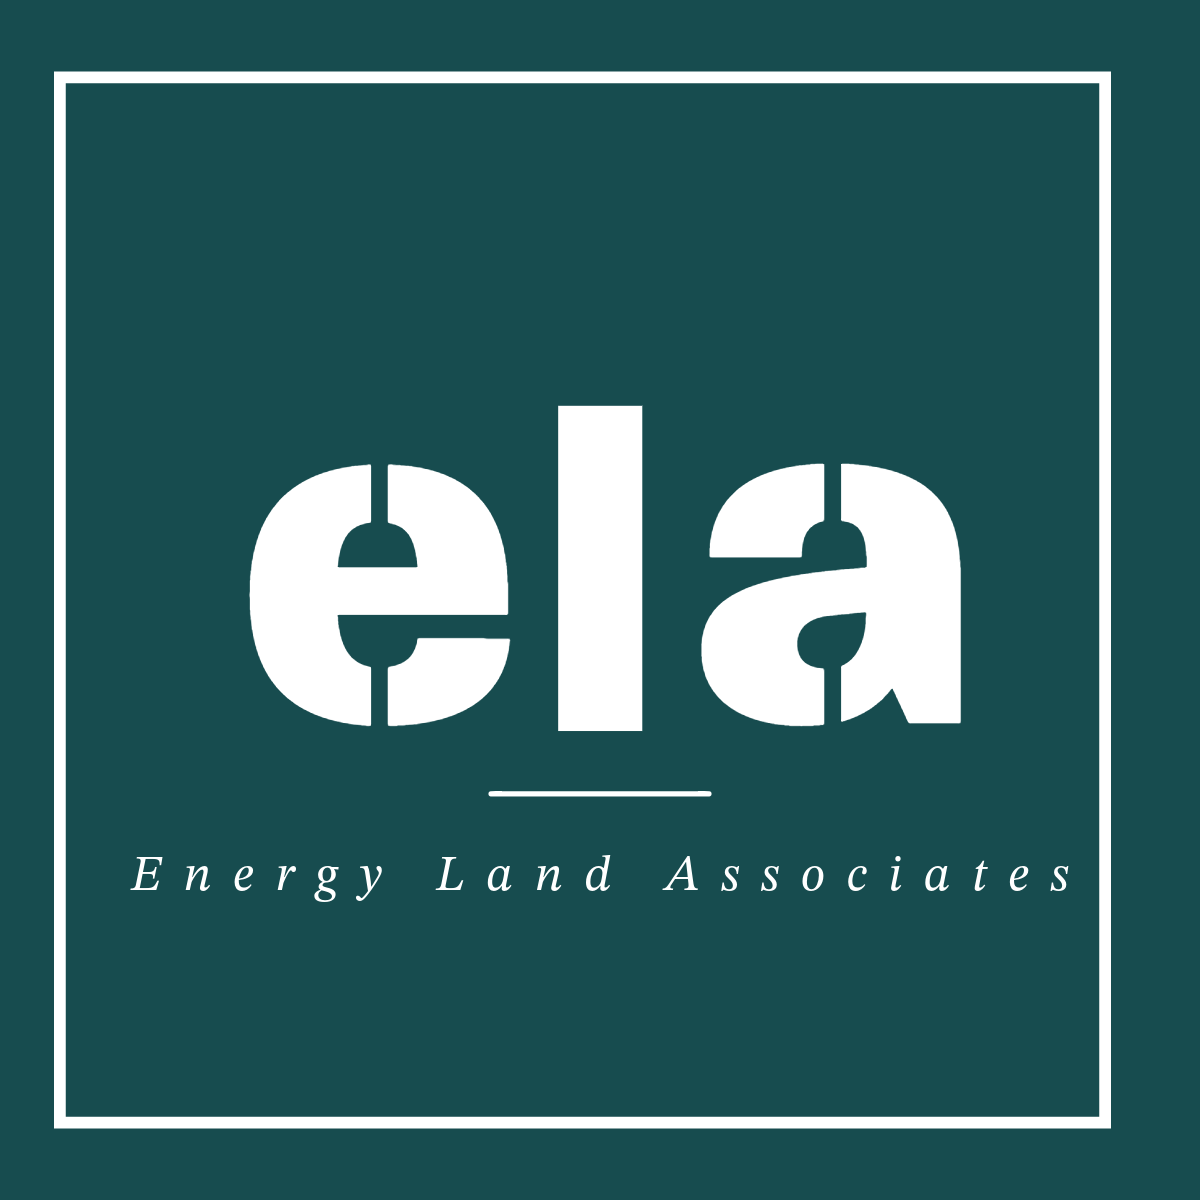 Energy Land Associates